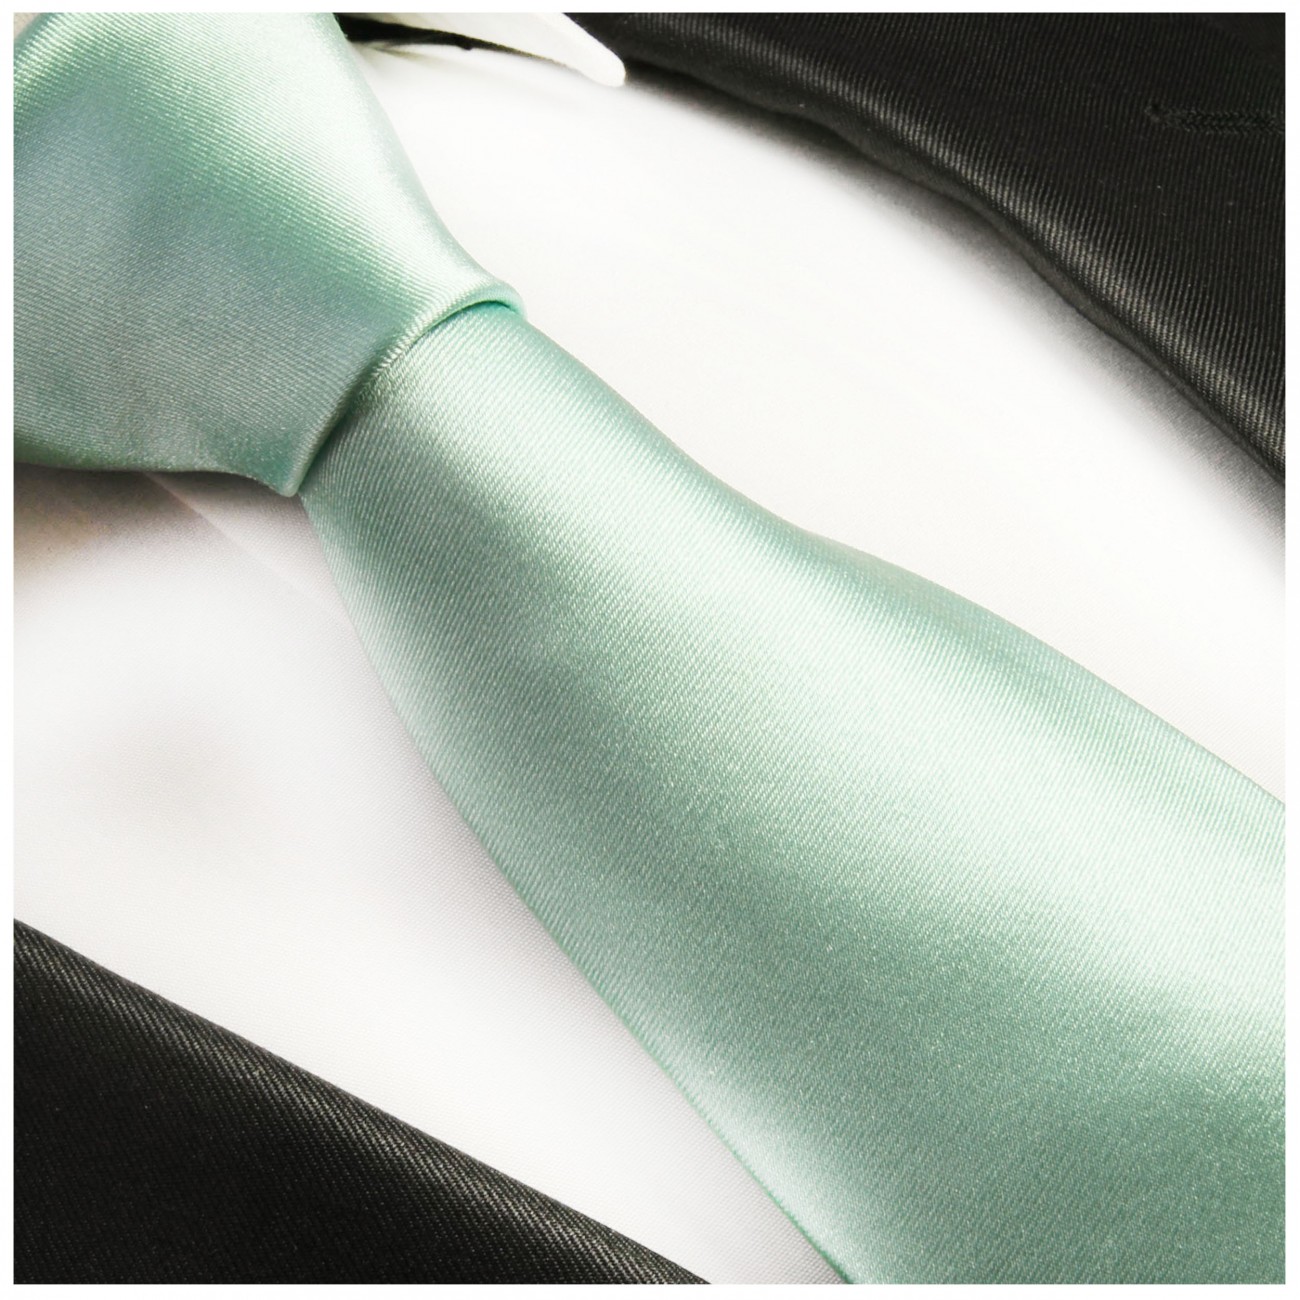 Krawatte mint grün